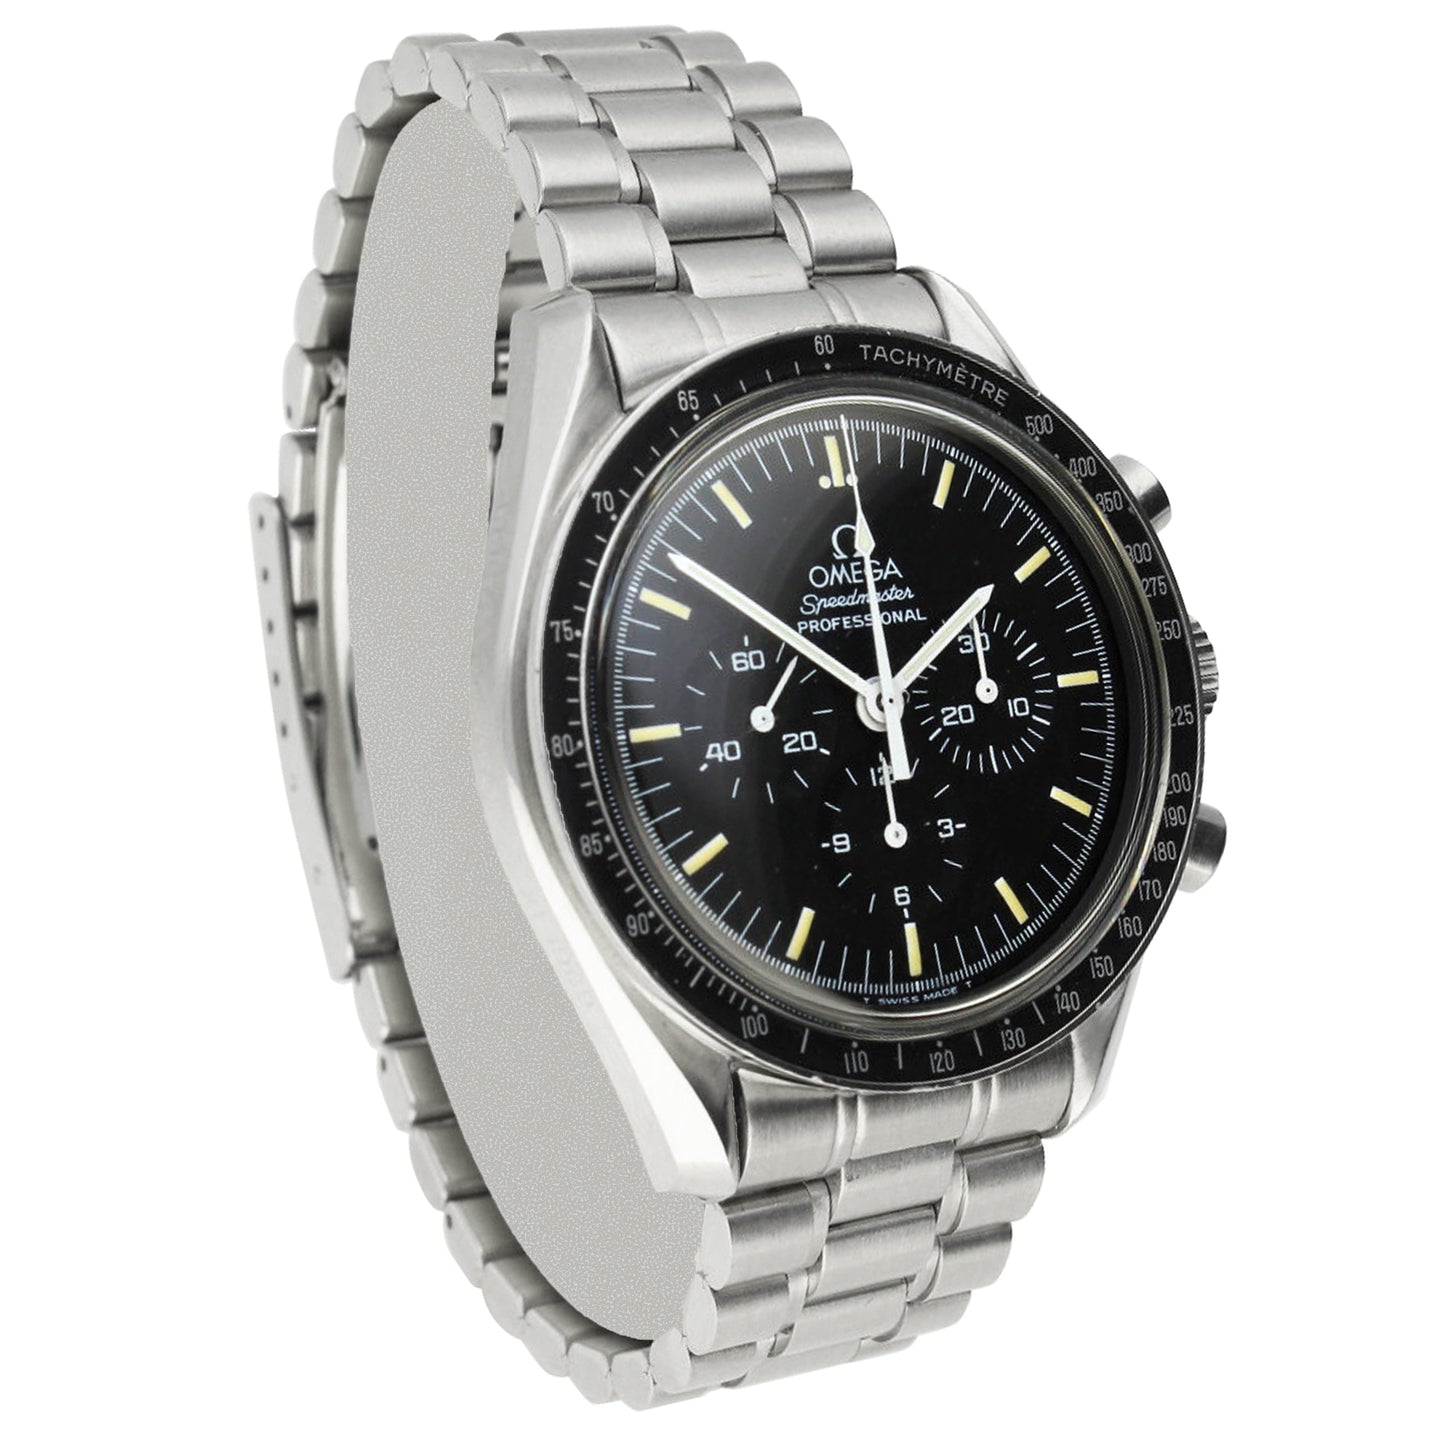 Stainless steel Speedmaster Professional 20th Anniversary 'Apollo XI' chronograph wristwatch. Made 1989